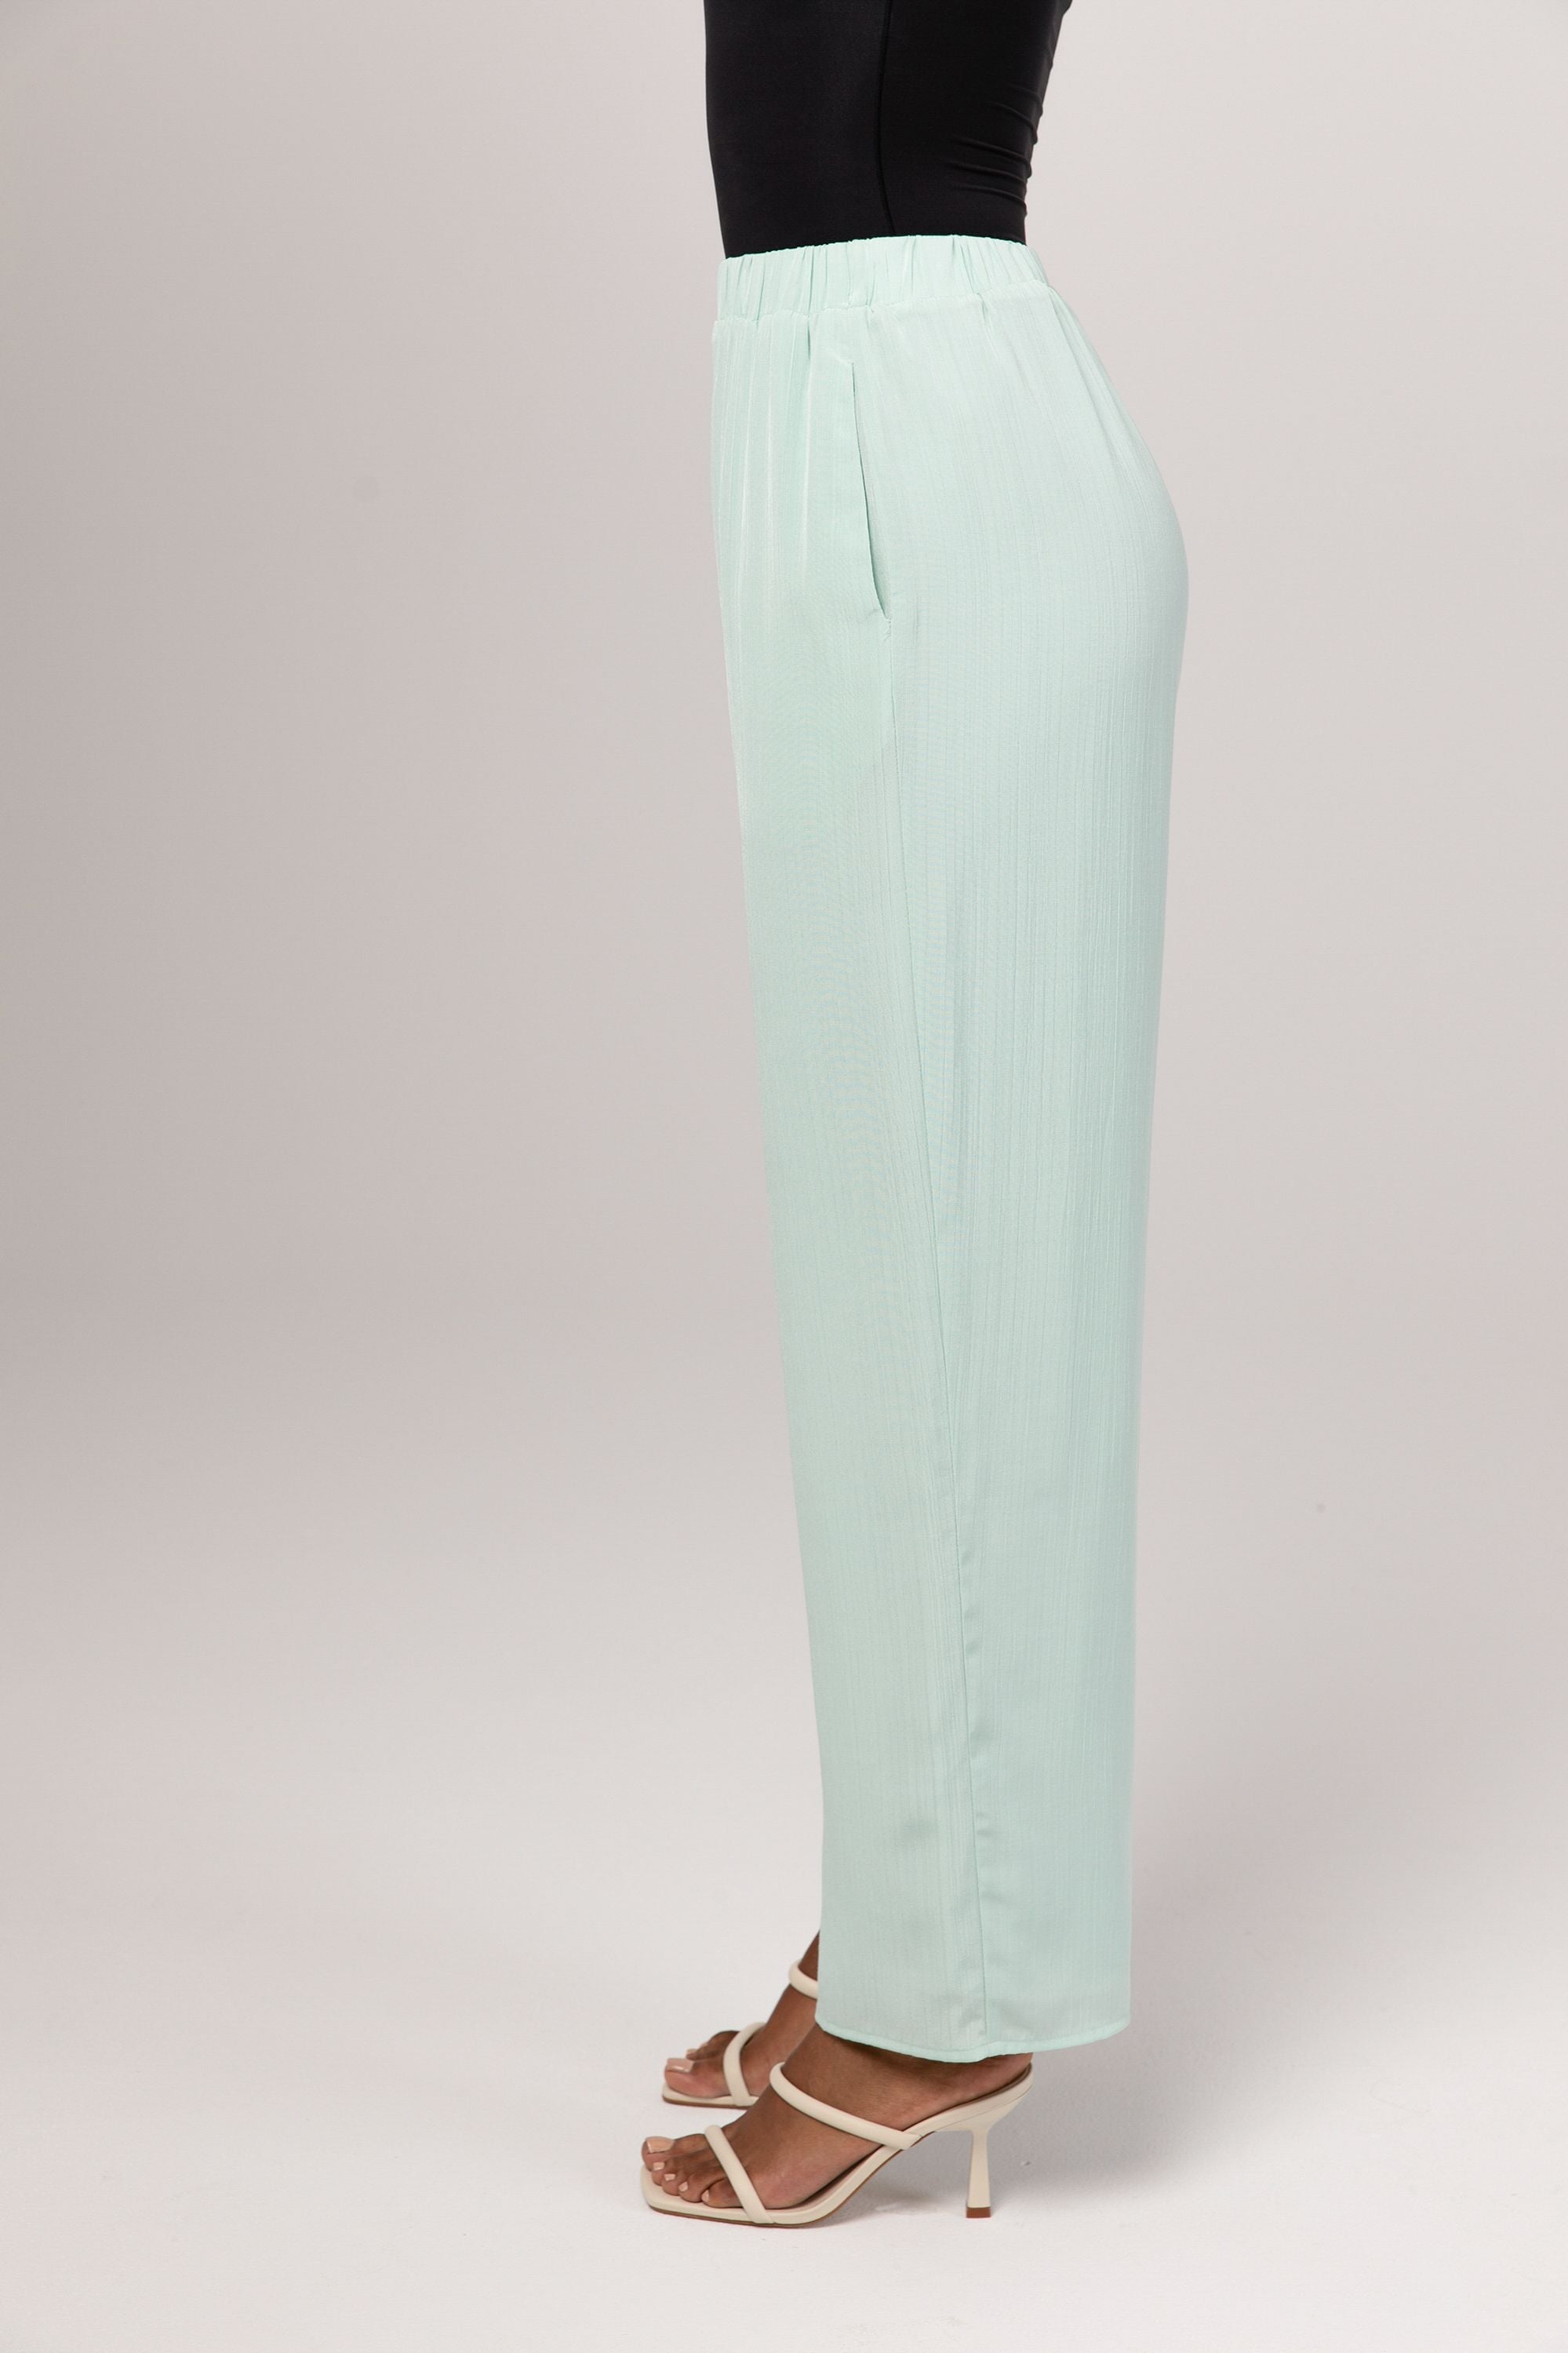 Nashwa Textured Rayon Wide Leg Pants - Mint Green Veiled 